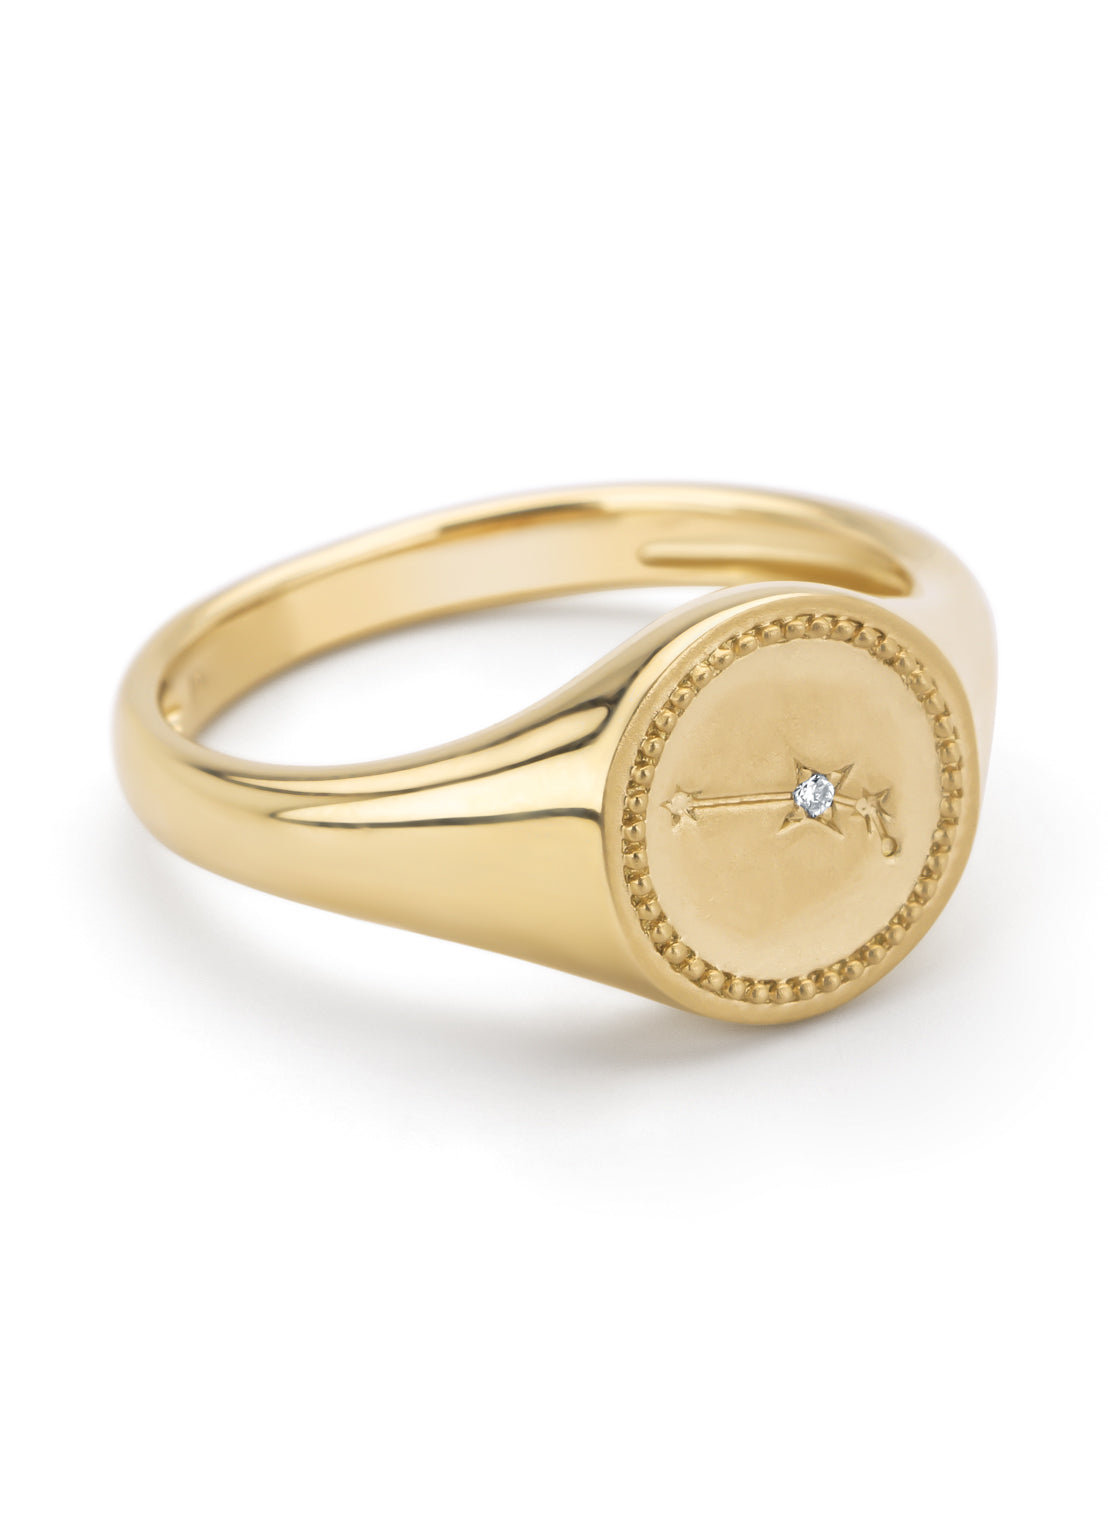 Yellow gold signet ring, zodiac-aries (ram)